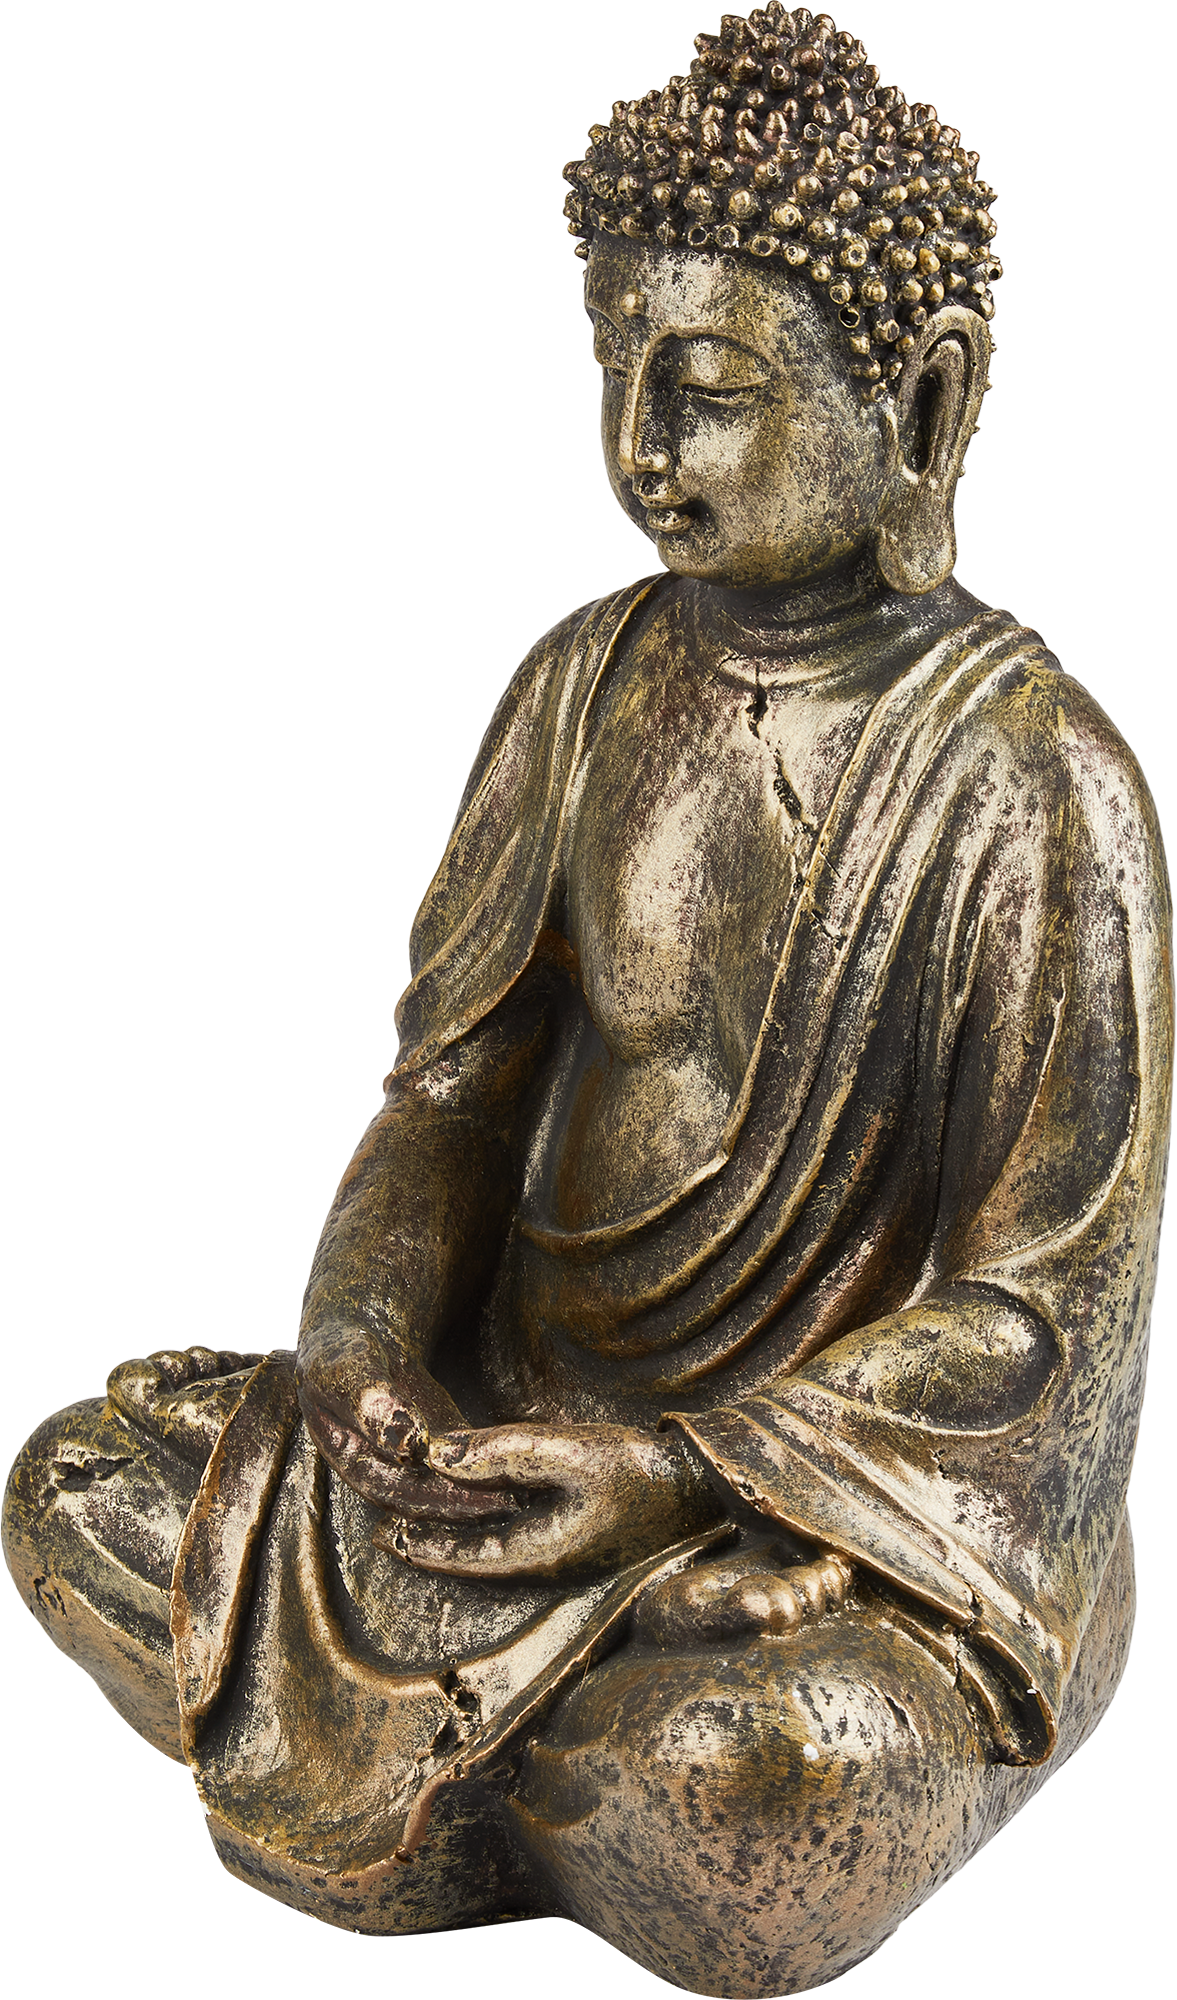 Фигура Будда бронзовая гипс